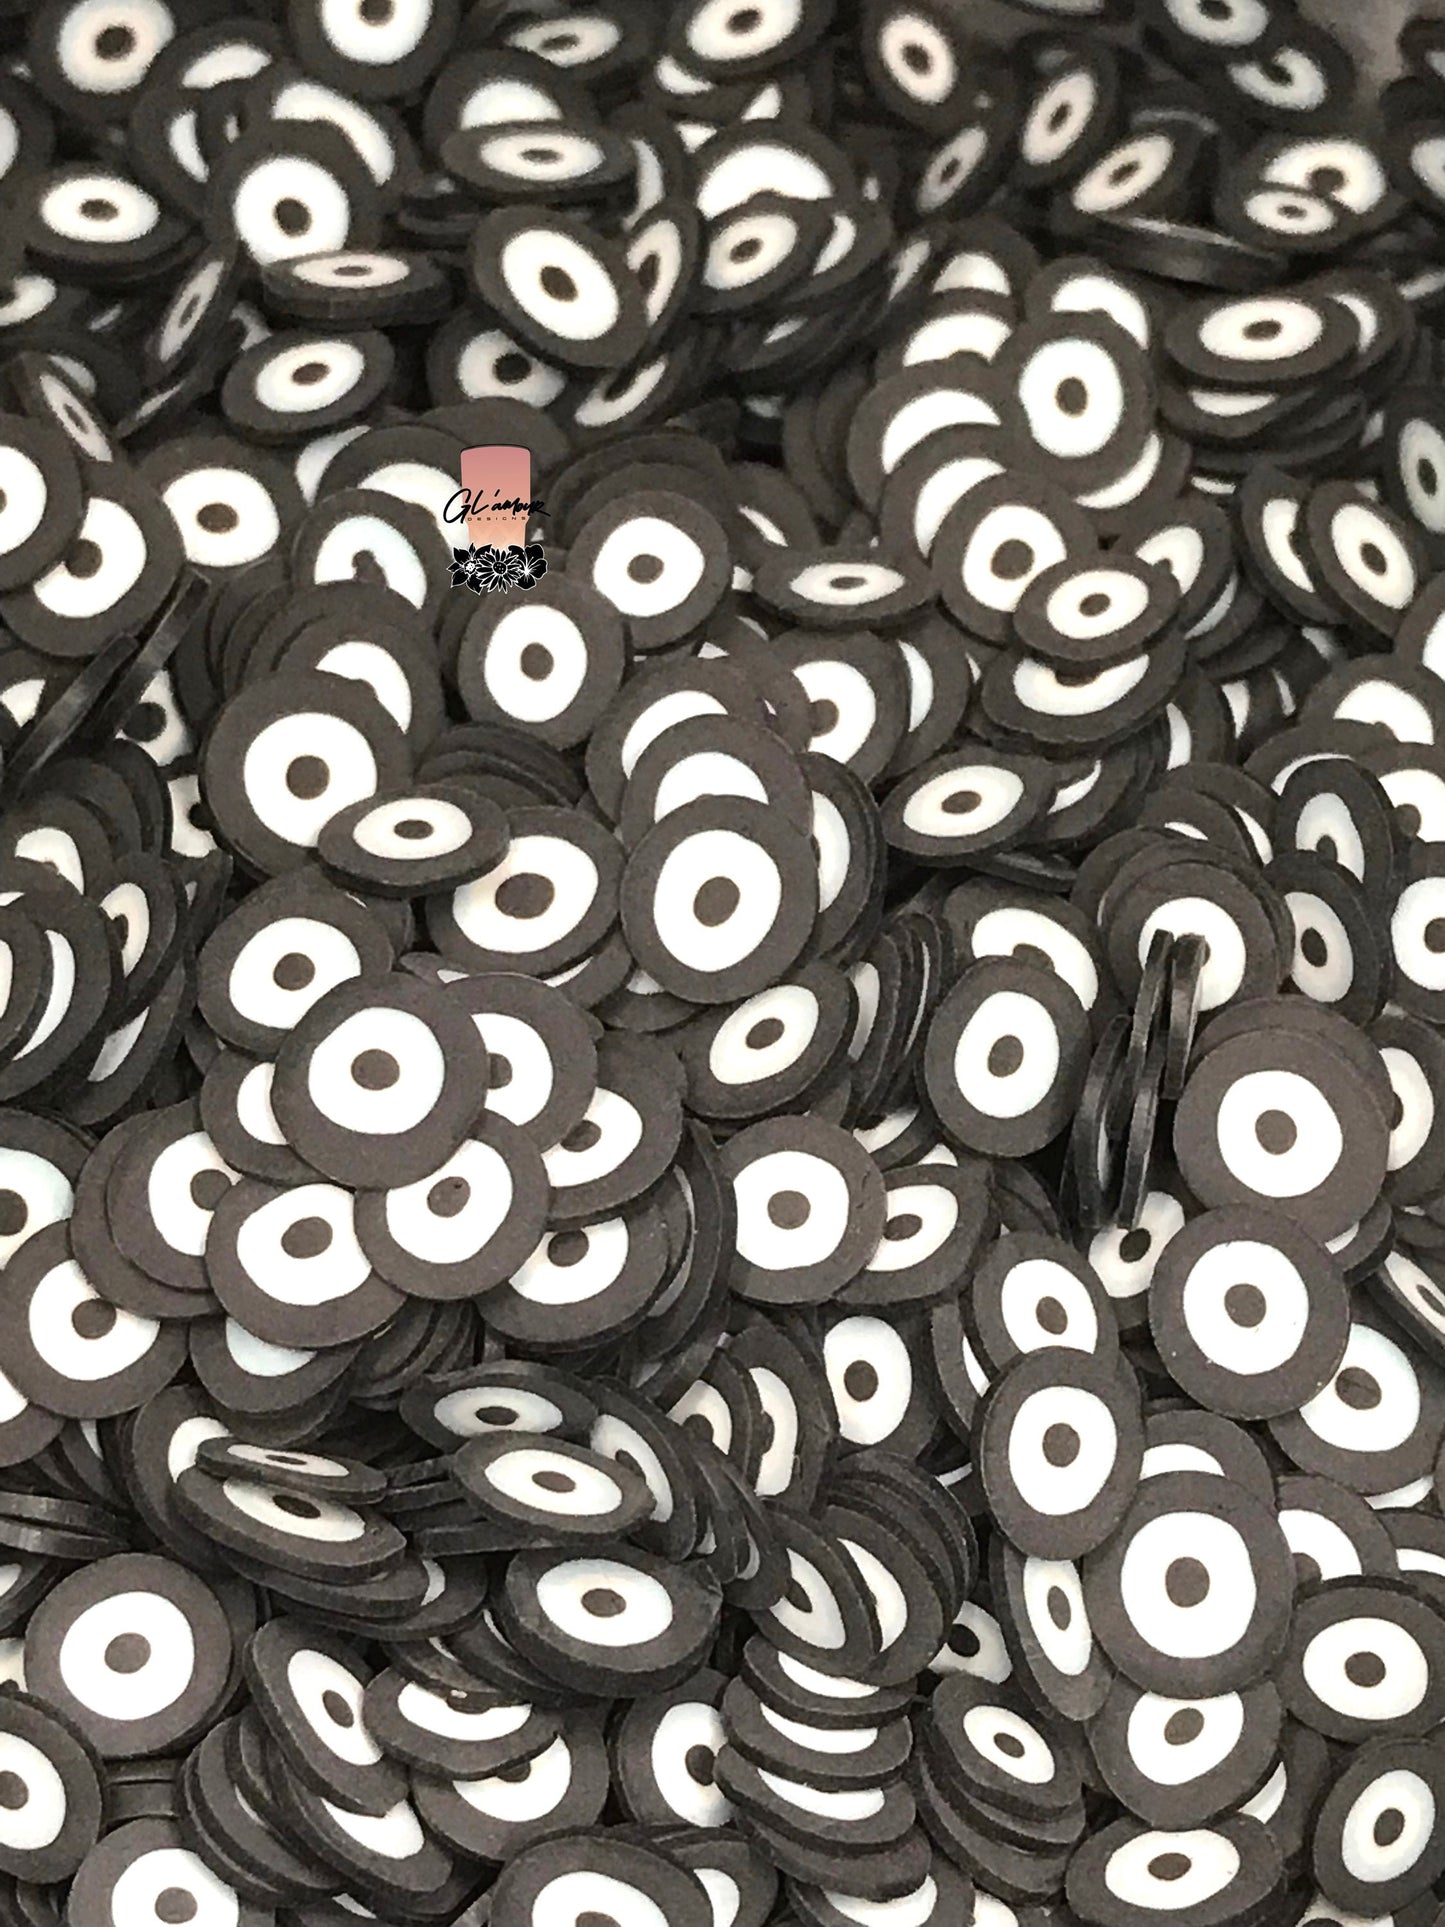 5mm Ojo (Eyeball) Black Polymer Slices -small